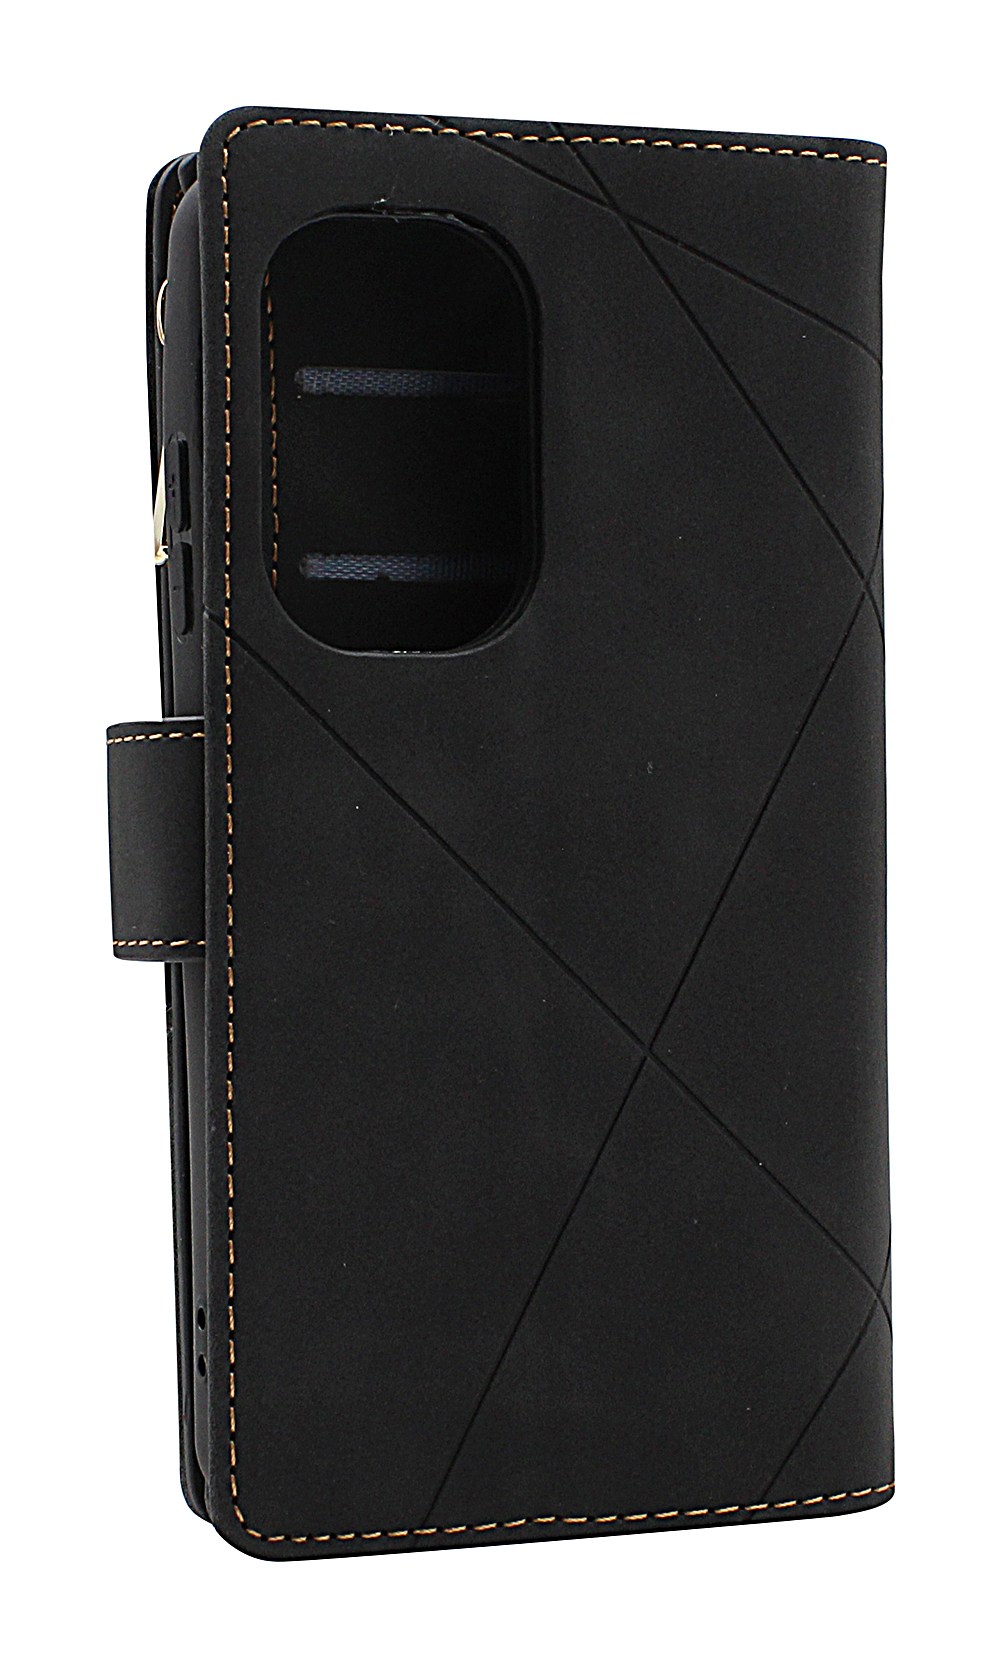 XL Standcase Lyxetui Asus ZenFone 10 5G